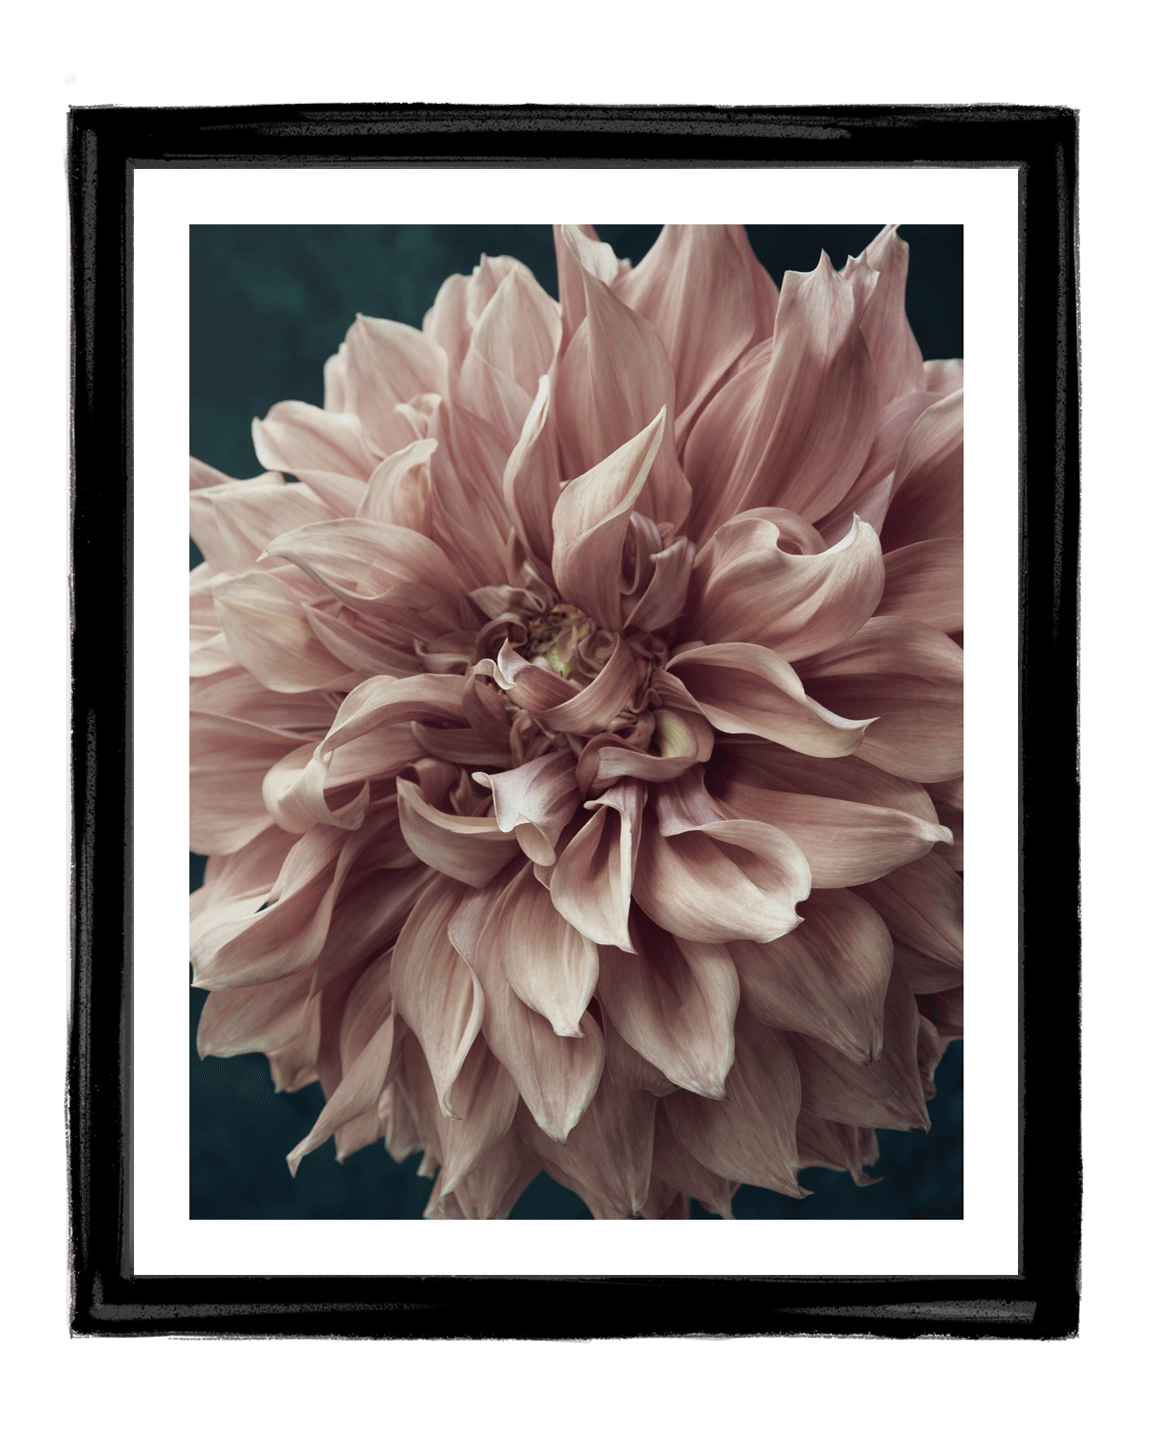 A Moment of Softness | Flower Art Prints